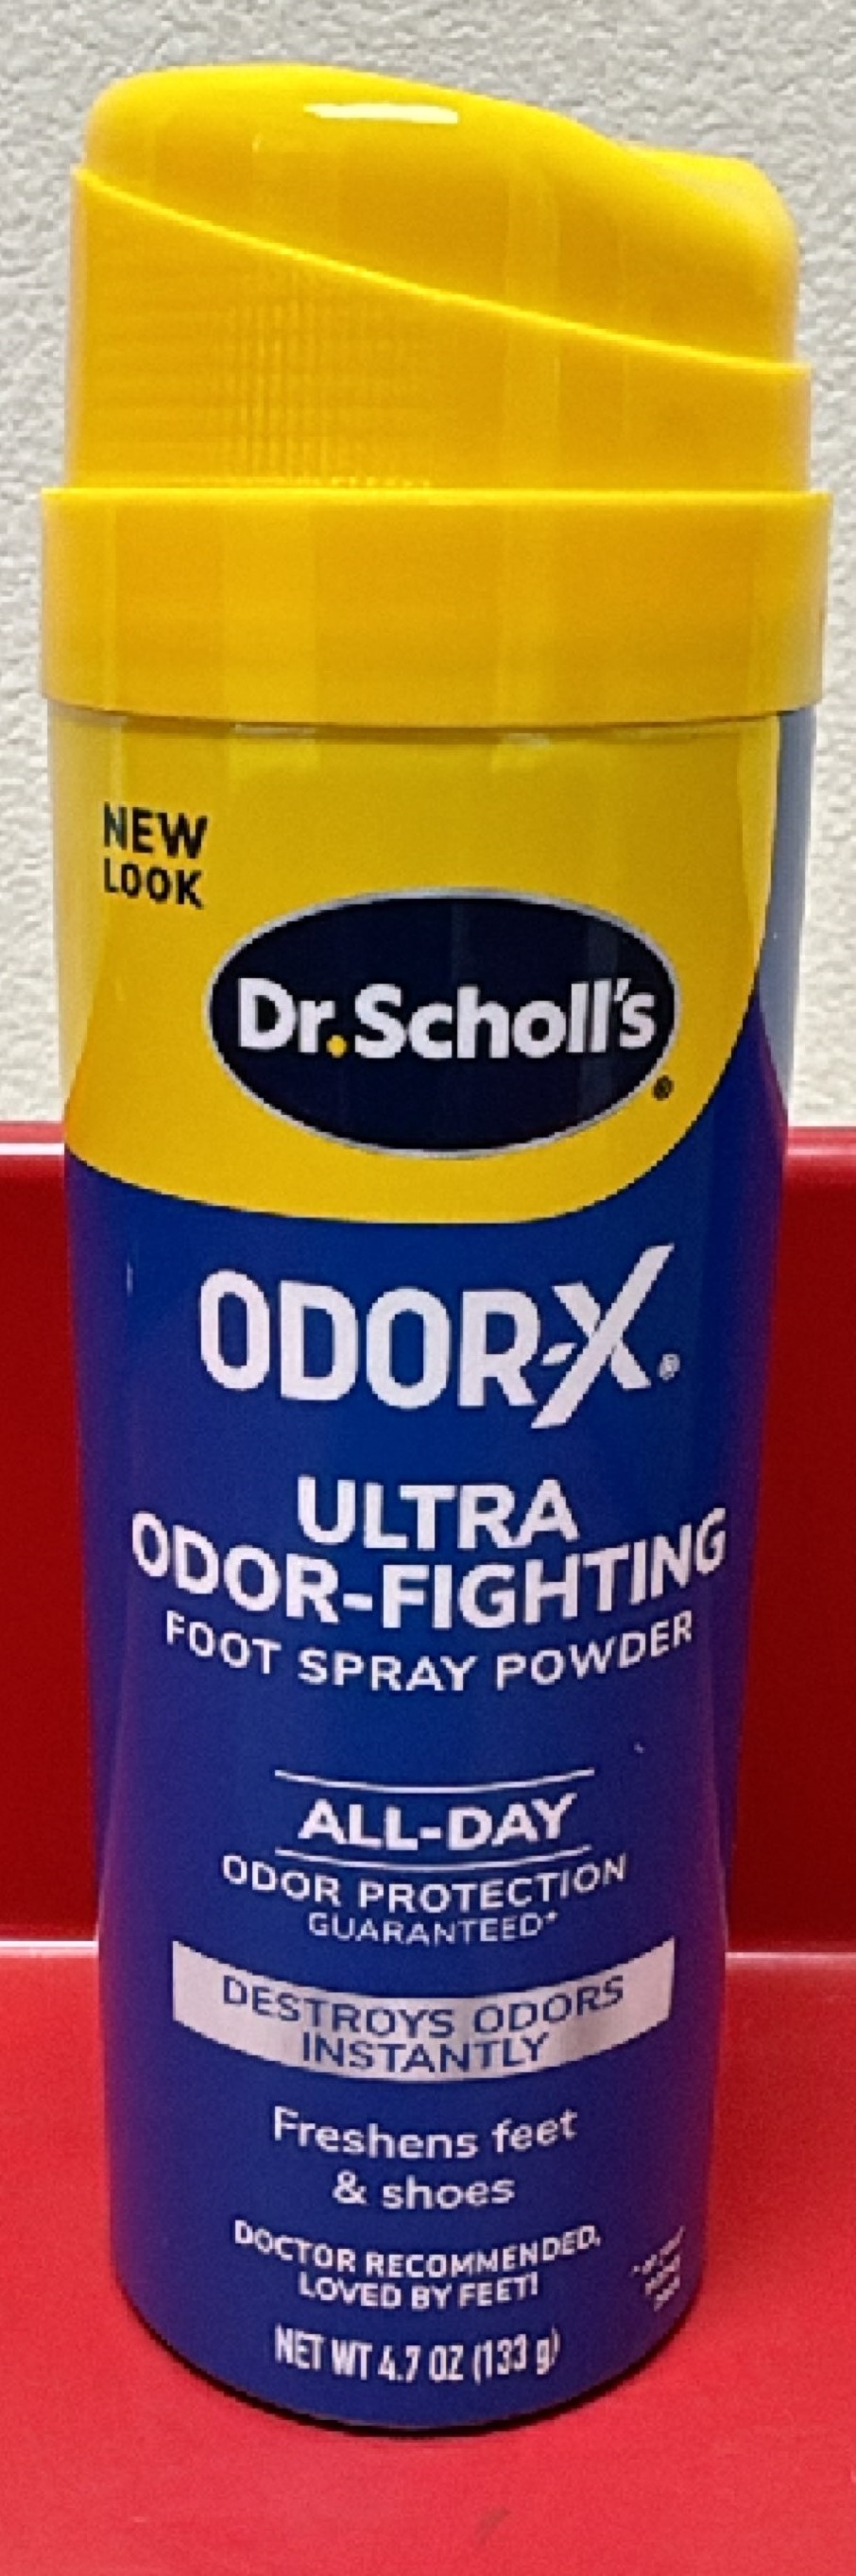 Dr. Scholls Odor Destroyer Mega Spray 4.7oz  By Emerson/DR Scholls USA 